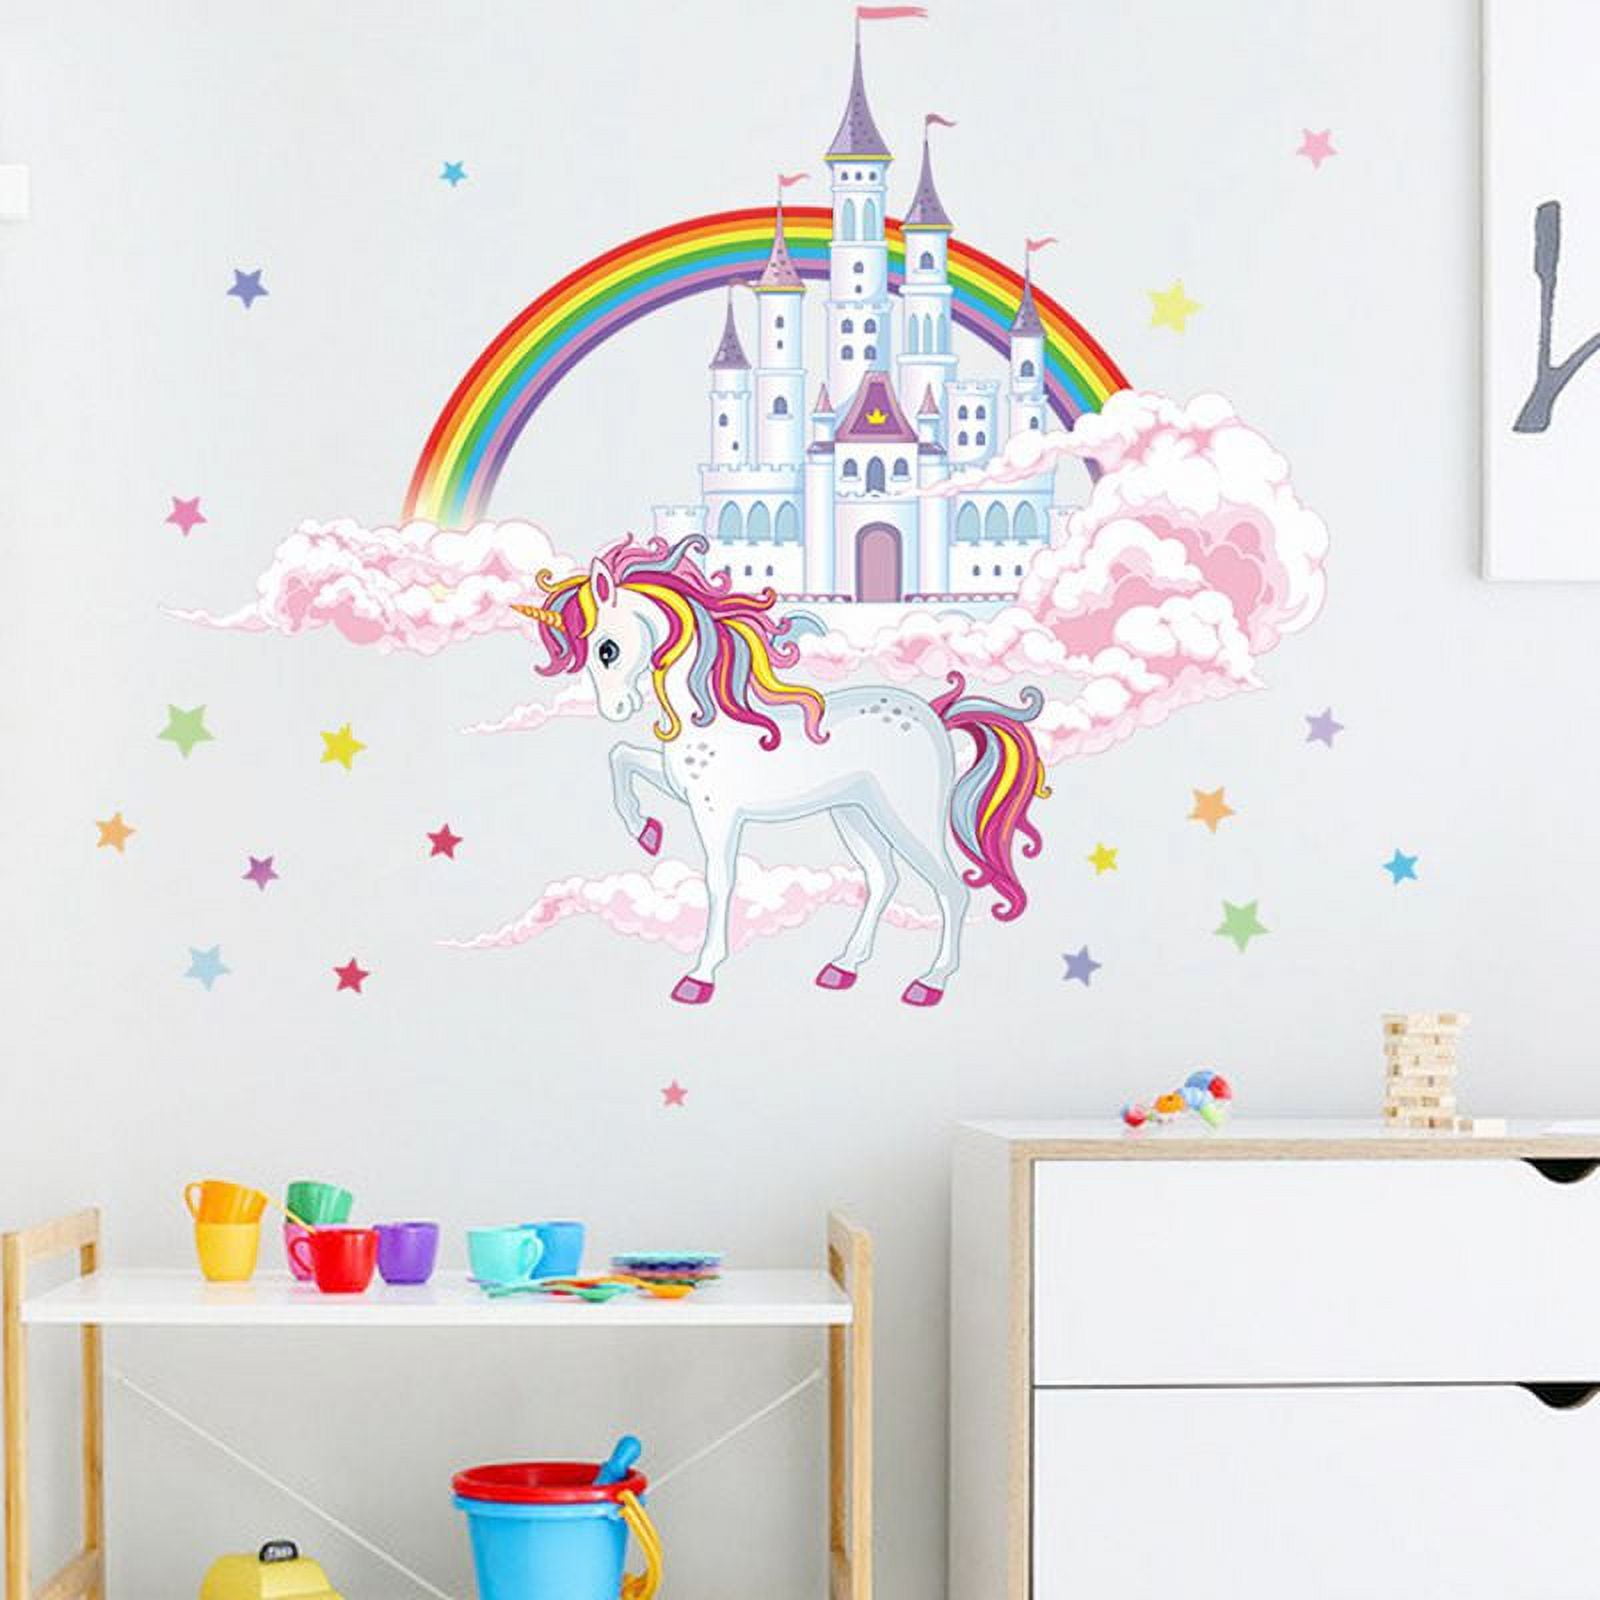 Taicanon Unicorn Wall Sticker ,Unicorn Wall Decals Decor with  Rainbow,Birthday Christmas Gifts for Boys Girls Kids Bedroom Decor